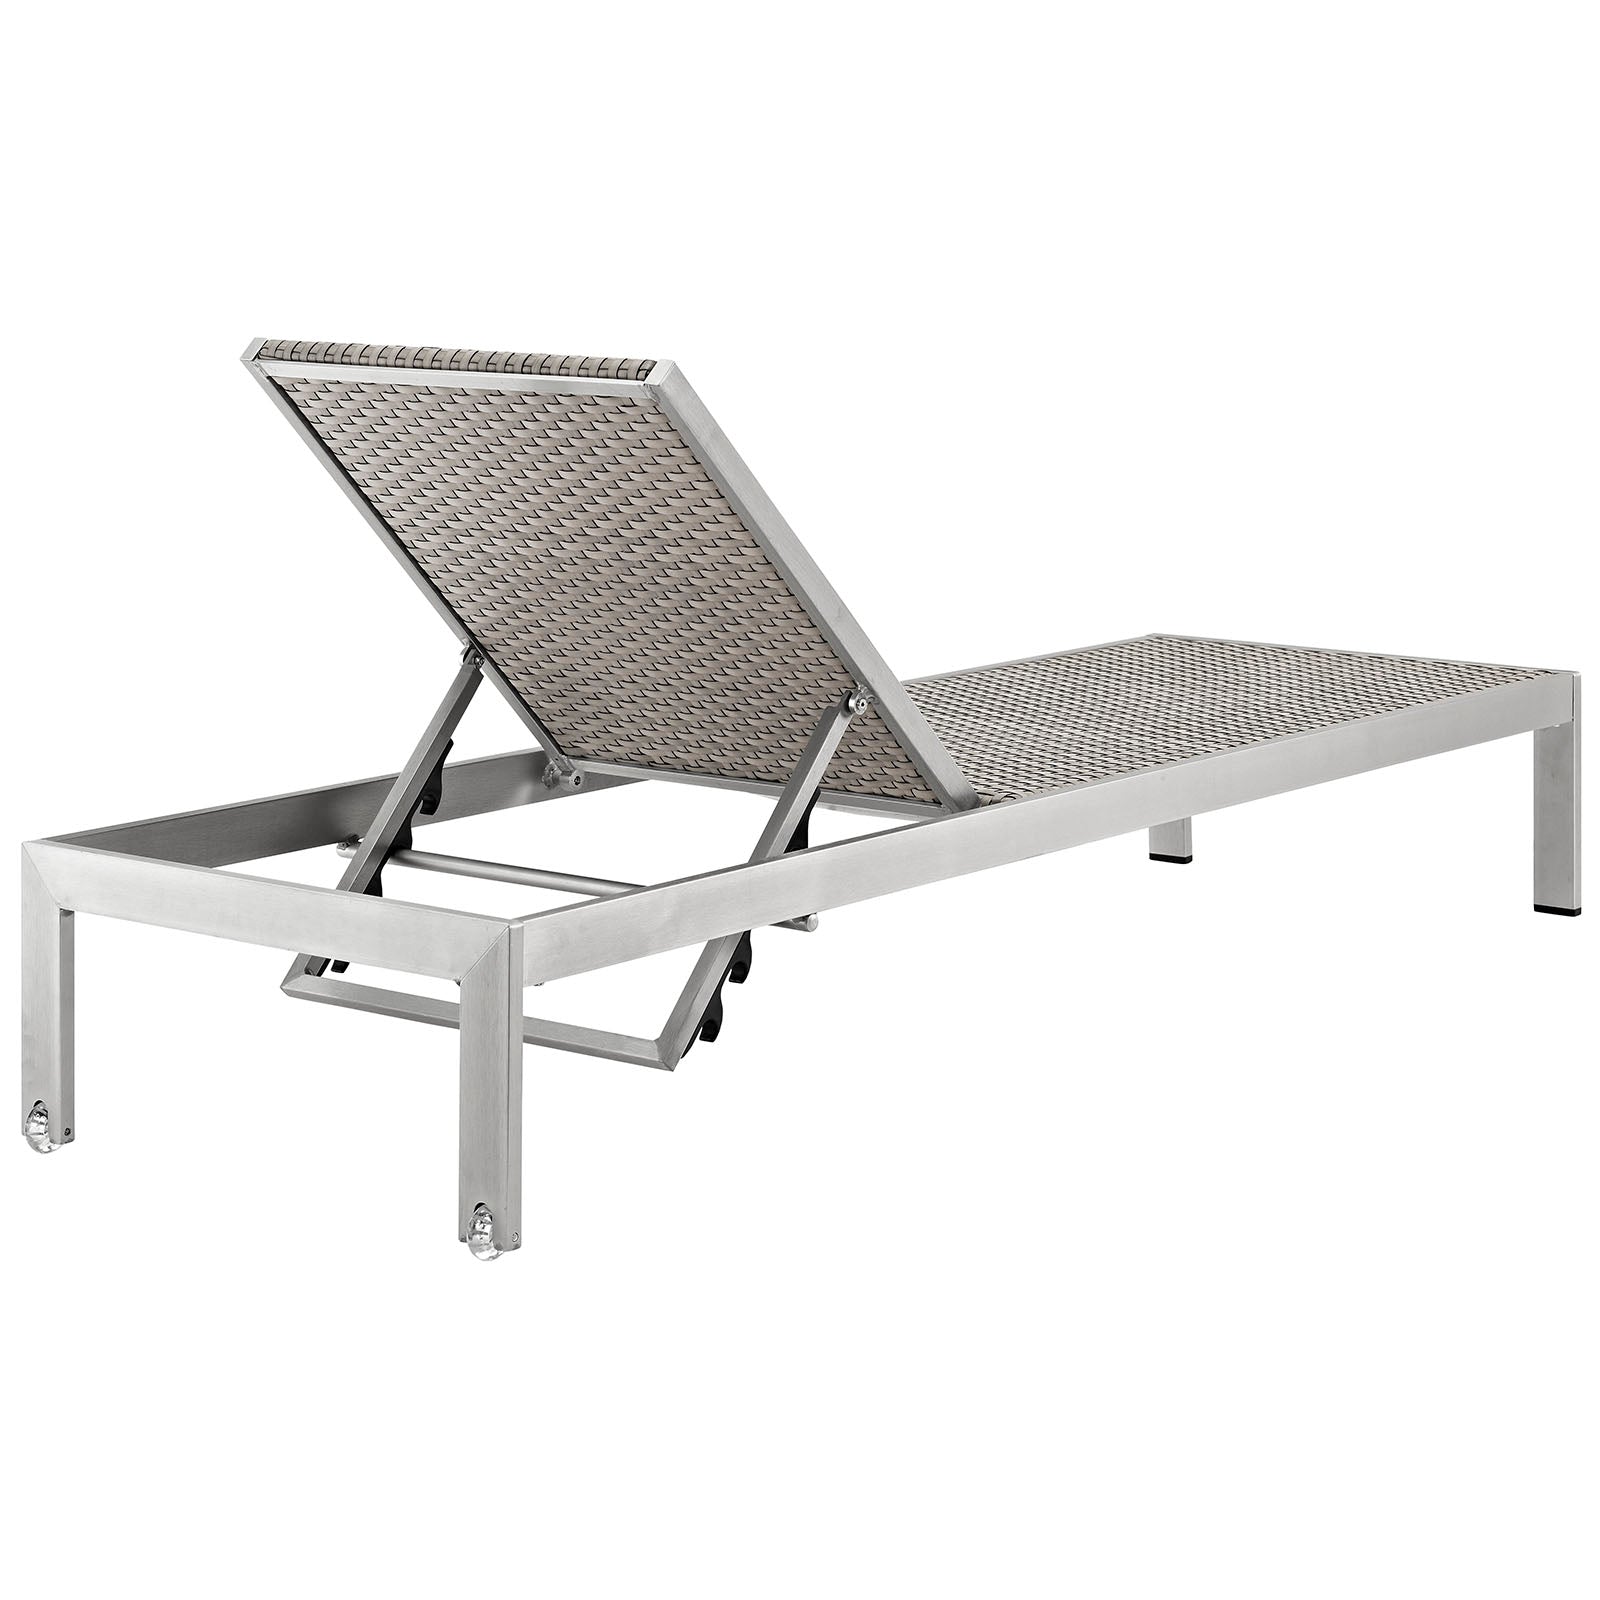 Modway - Shore Chaise Outdoor Patio Aluminum Set of 4 - EEI-2478